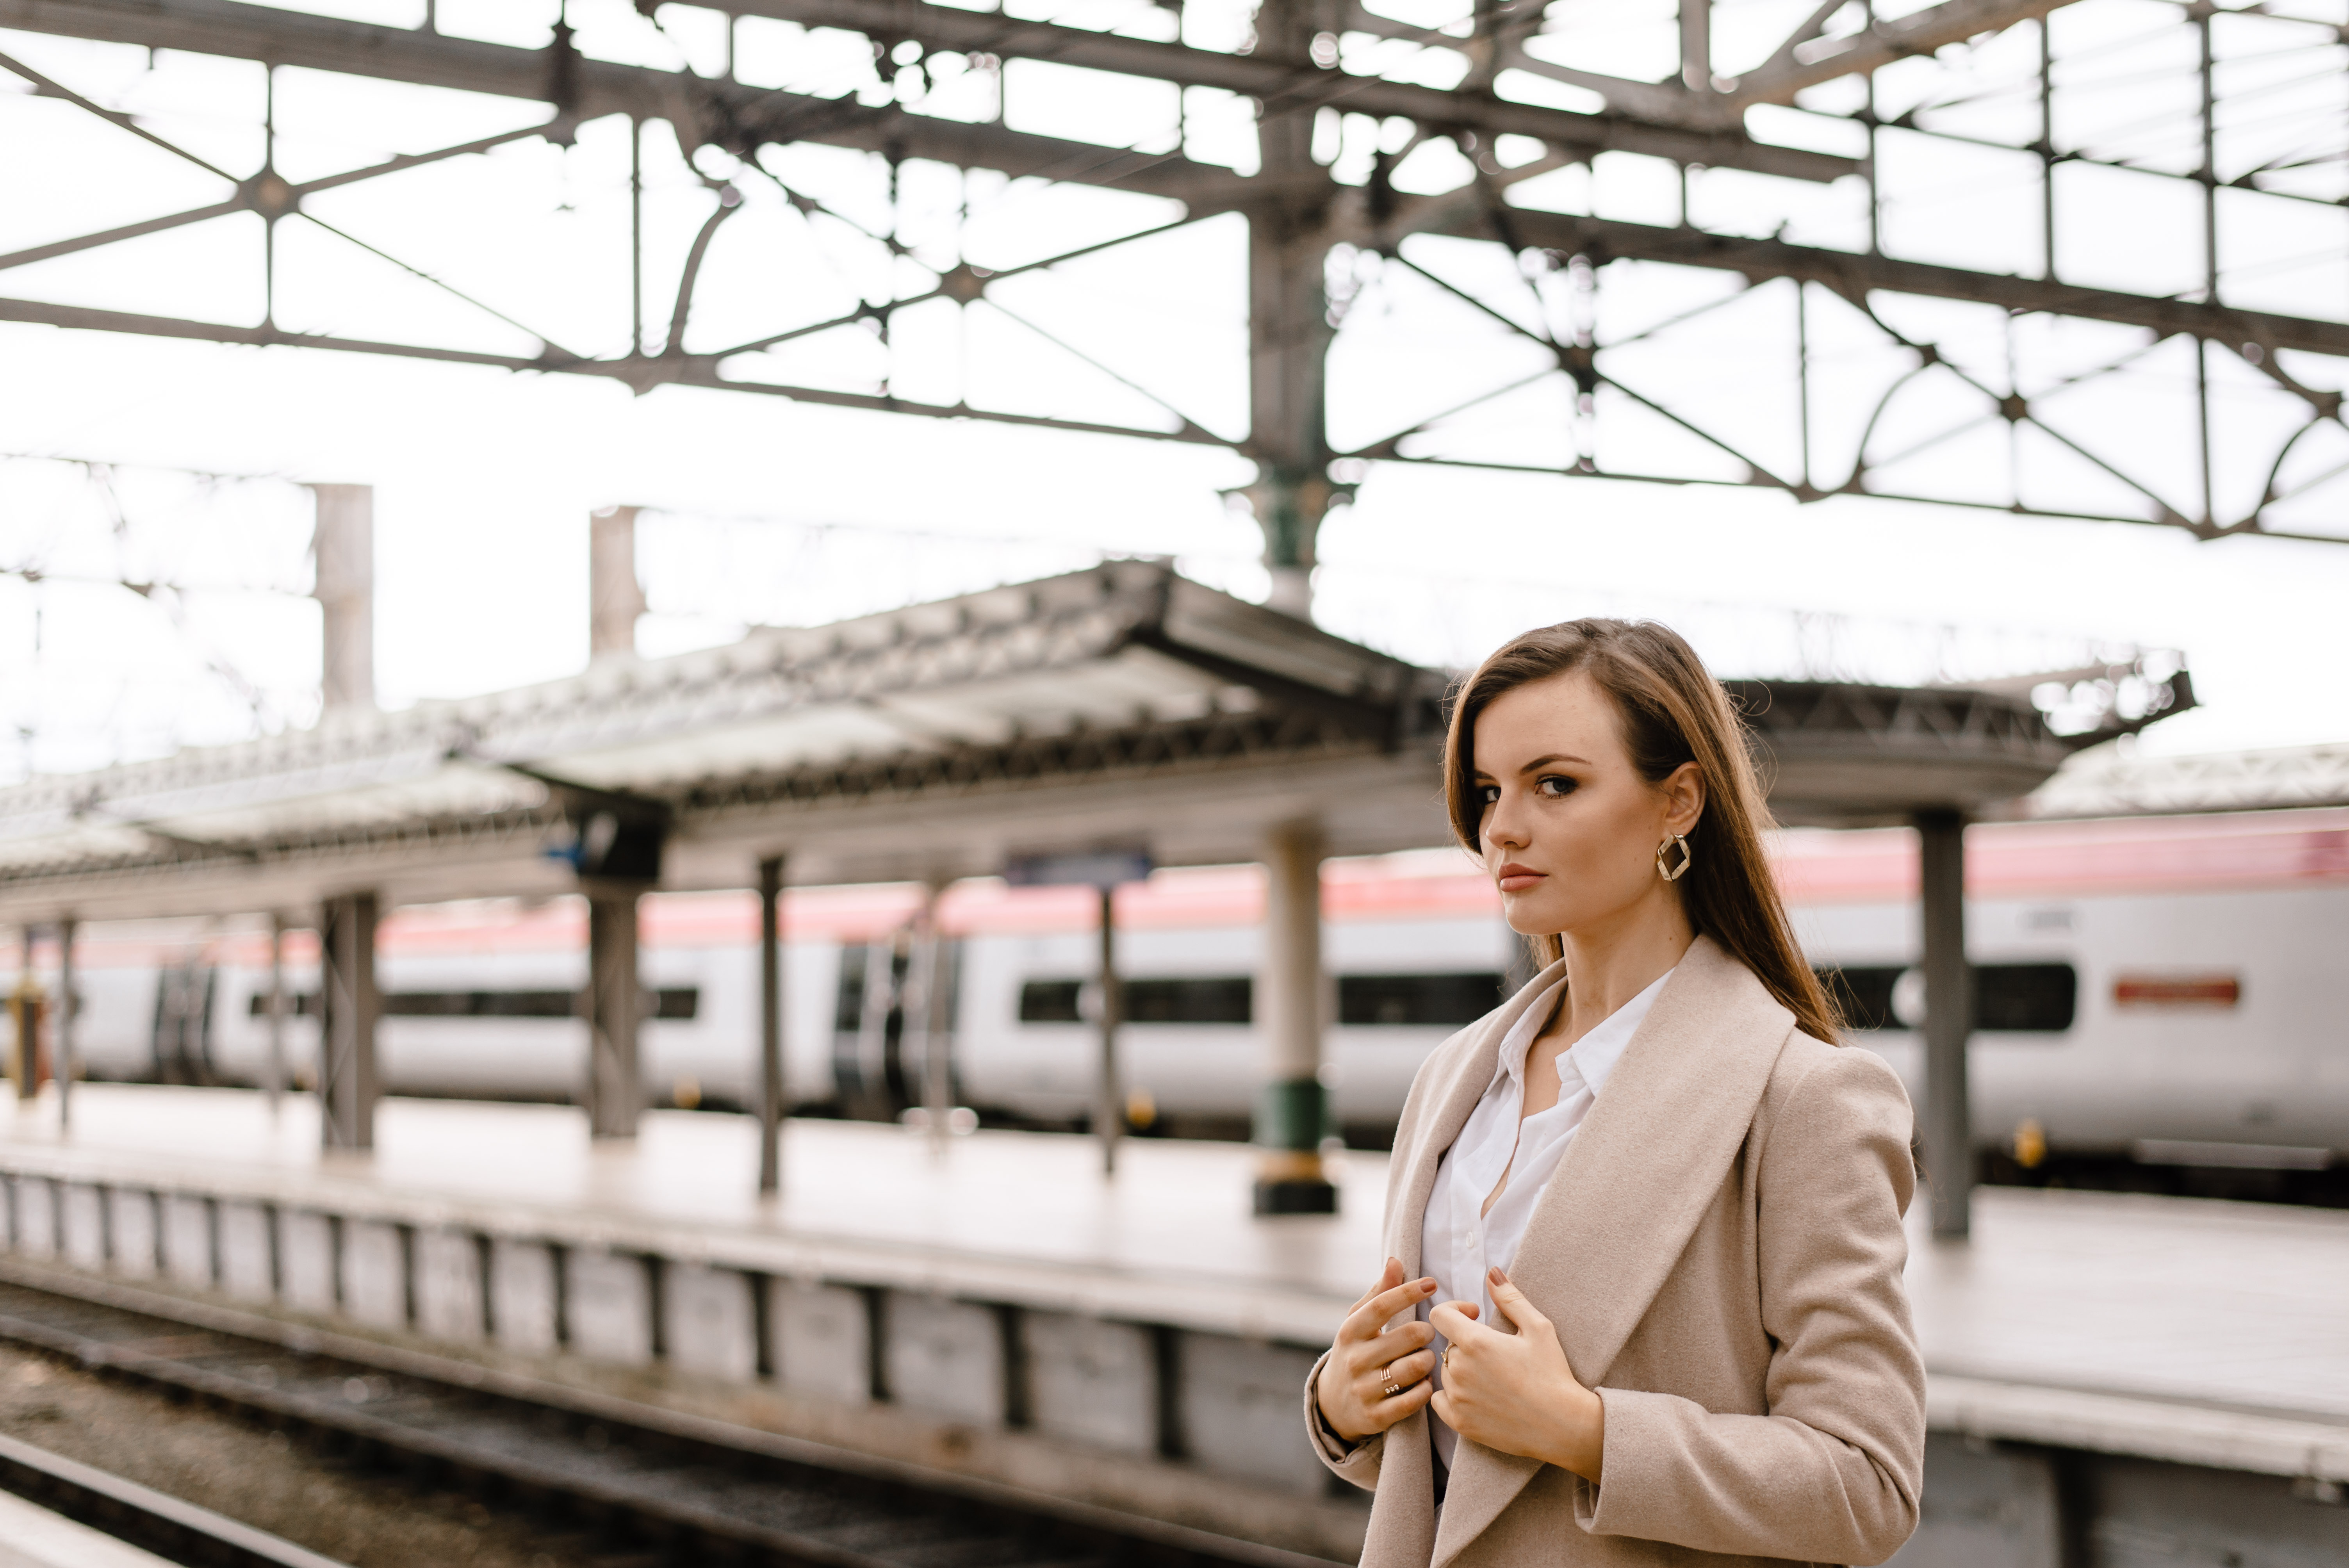 Girl wearing long beige coat standing on platform at train station Manchester England.